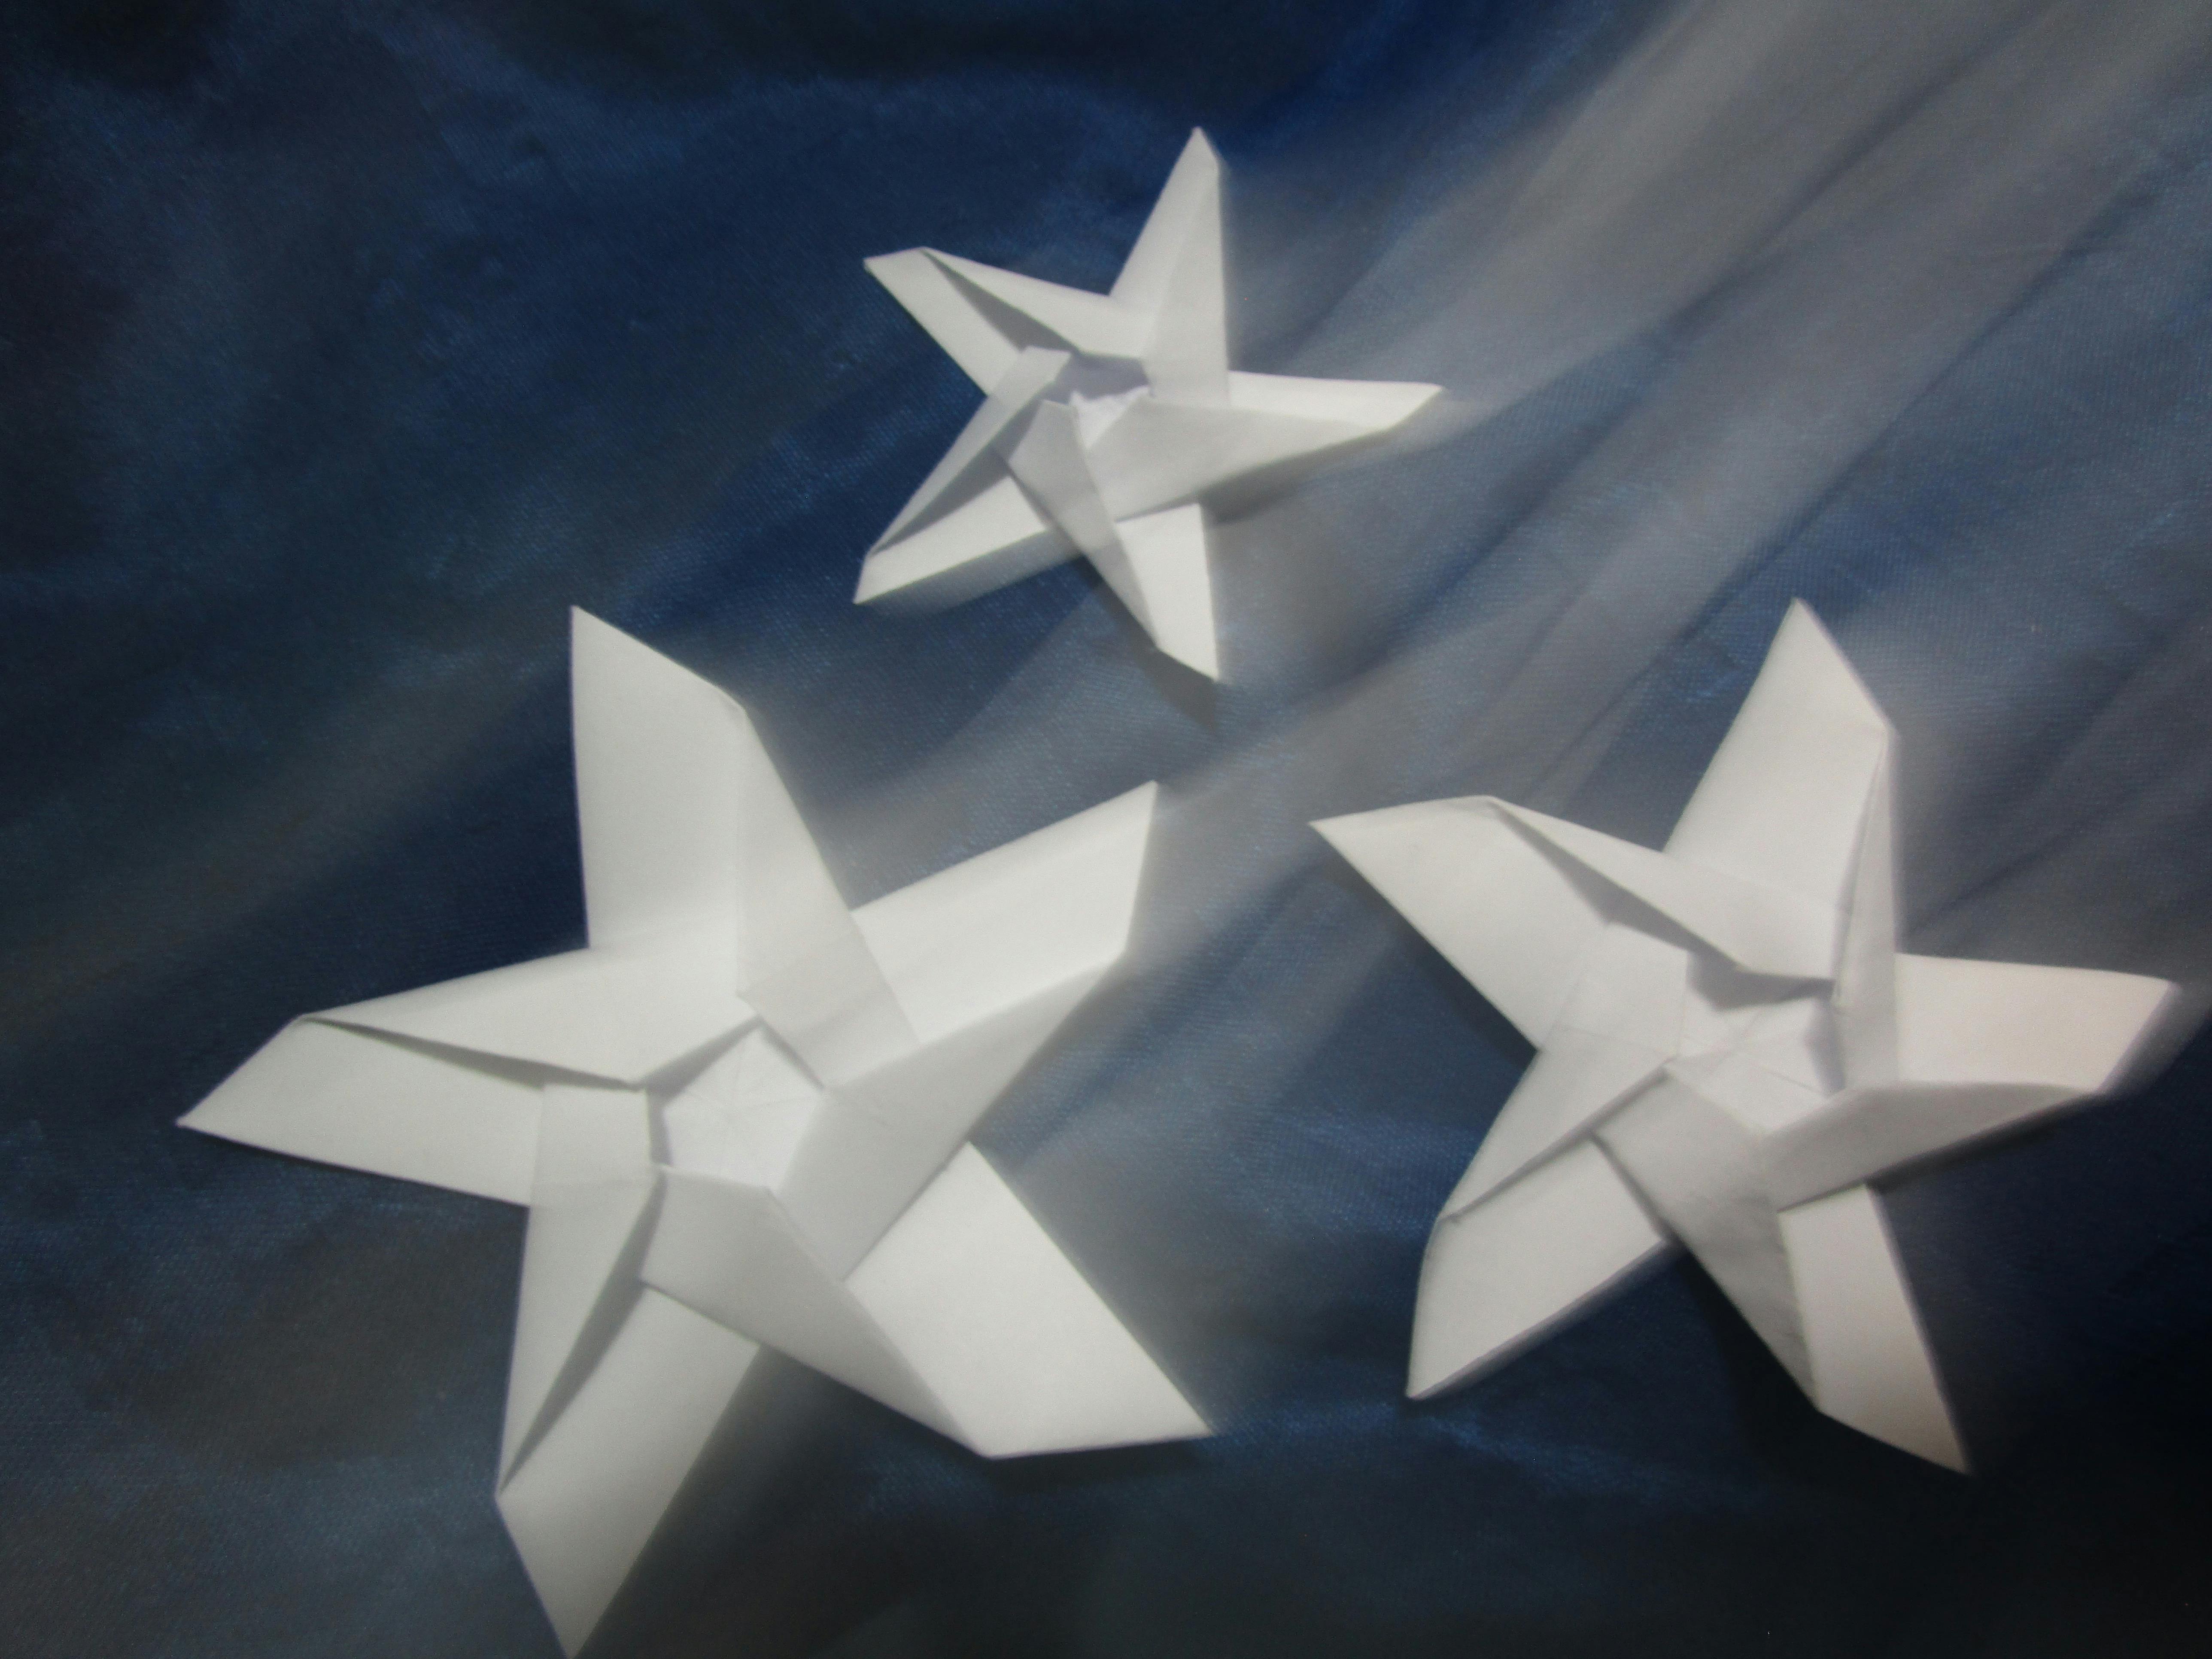 Free stock photo of ORIGAMI stars shooting white paper folding art